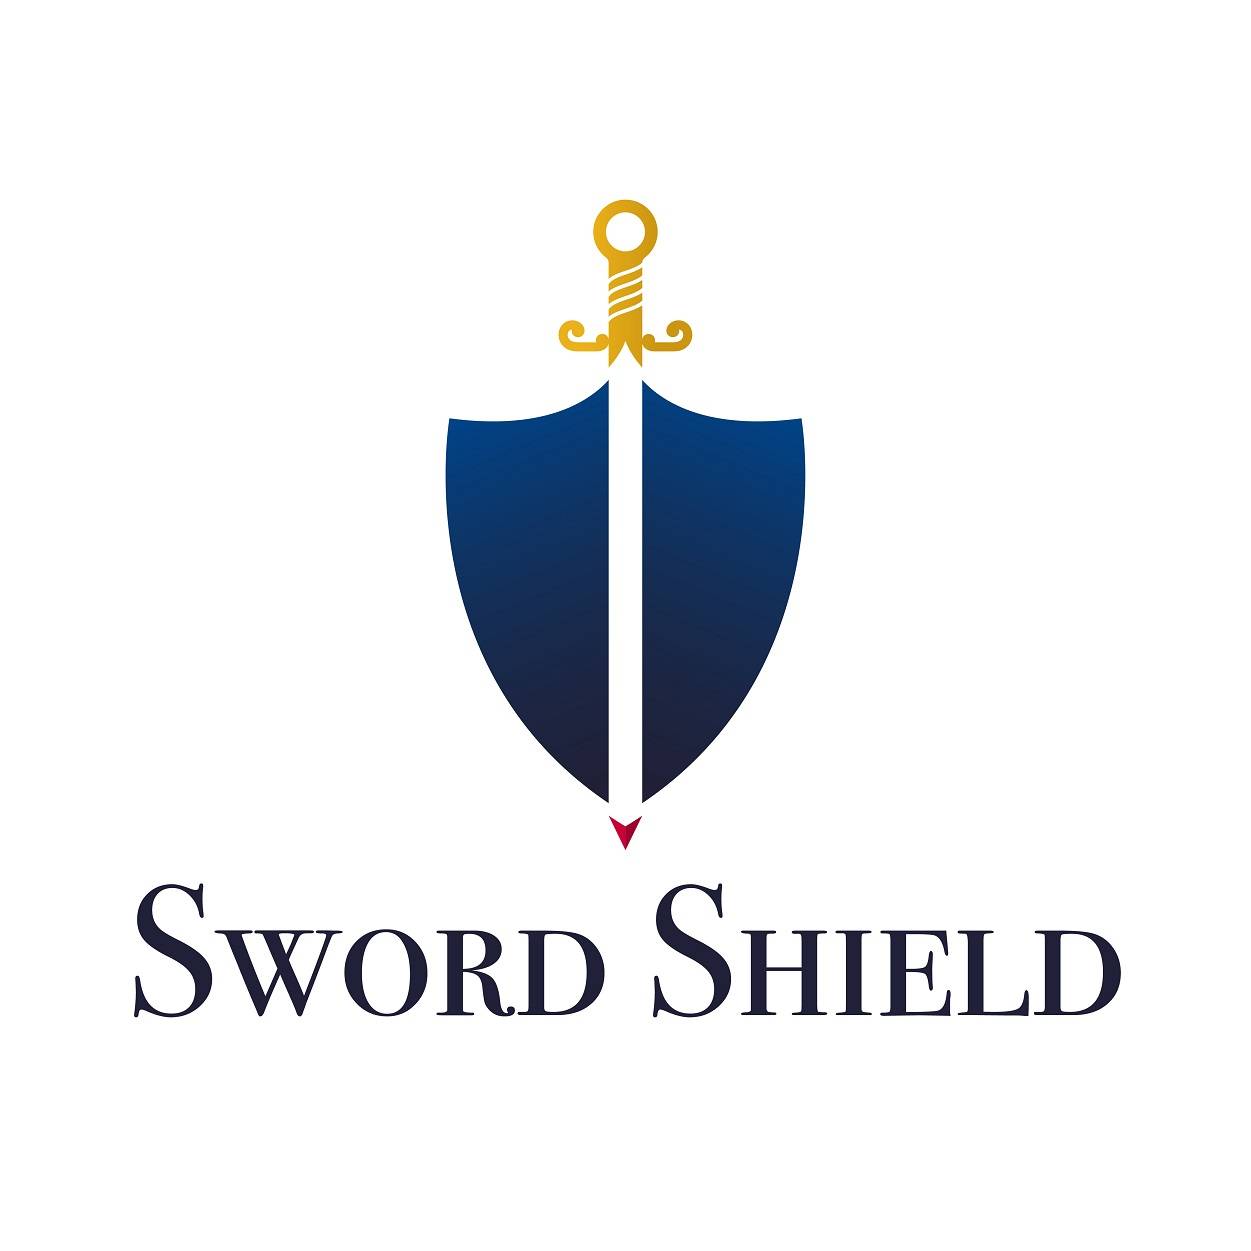 Sword shield logo design